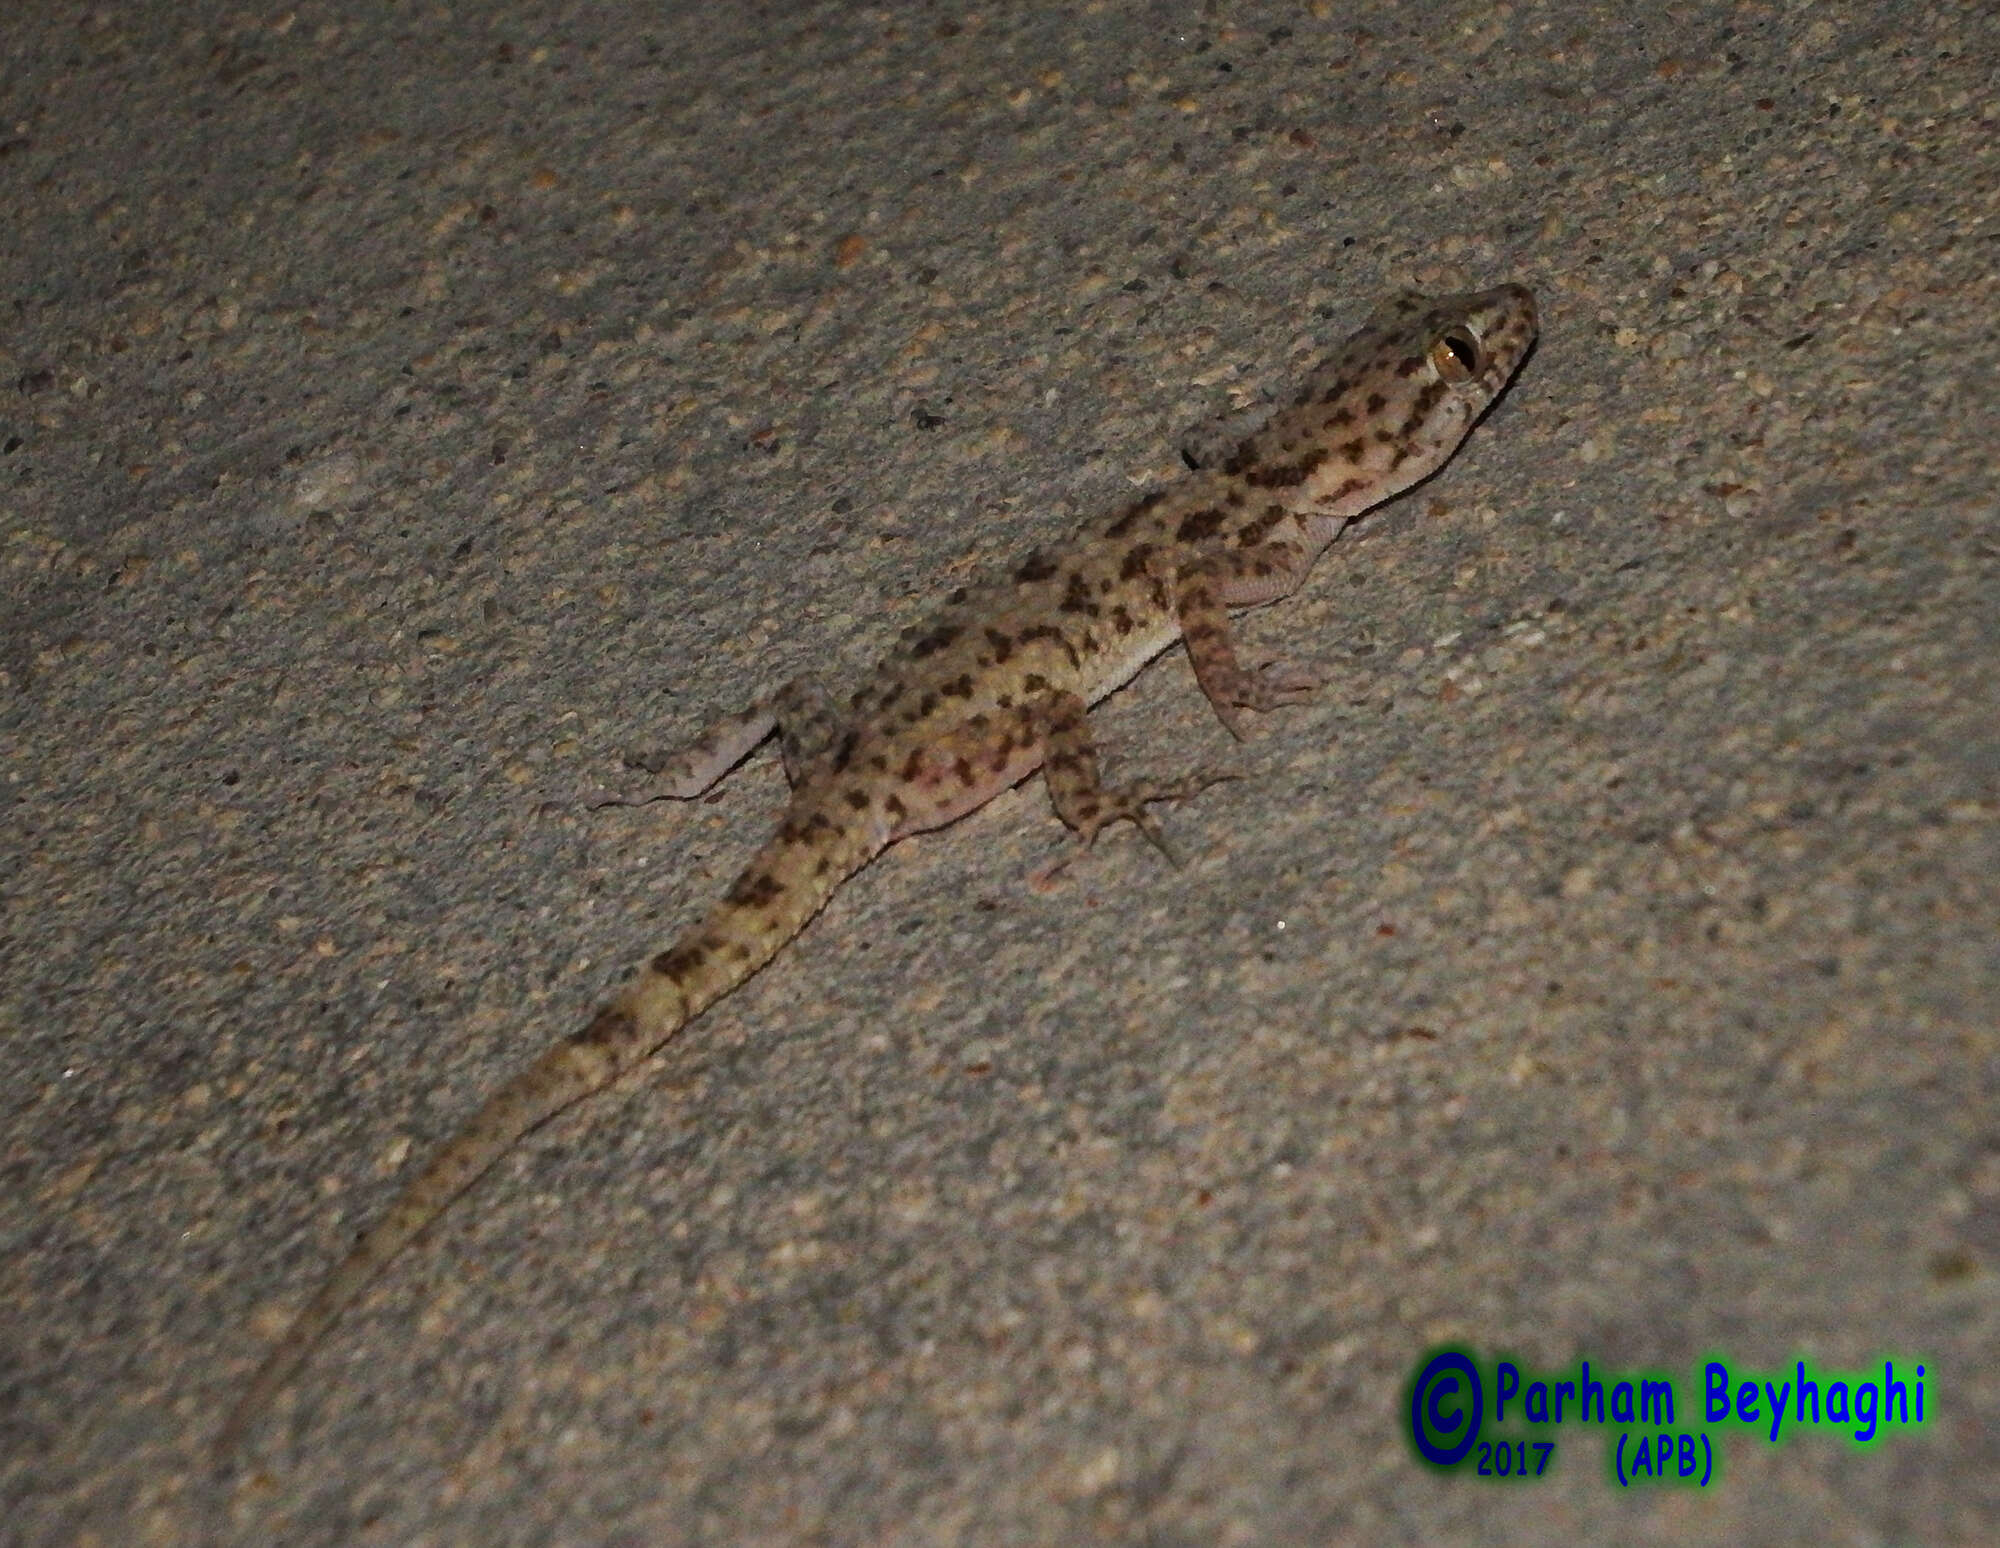 Image of Kachh Gecko